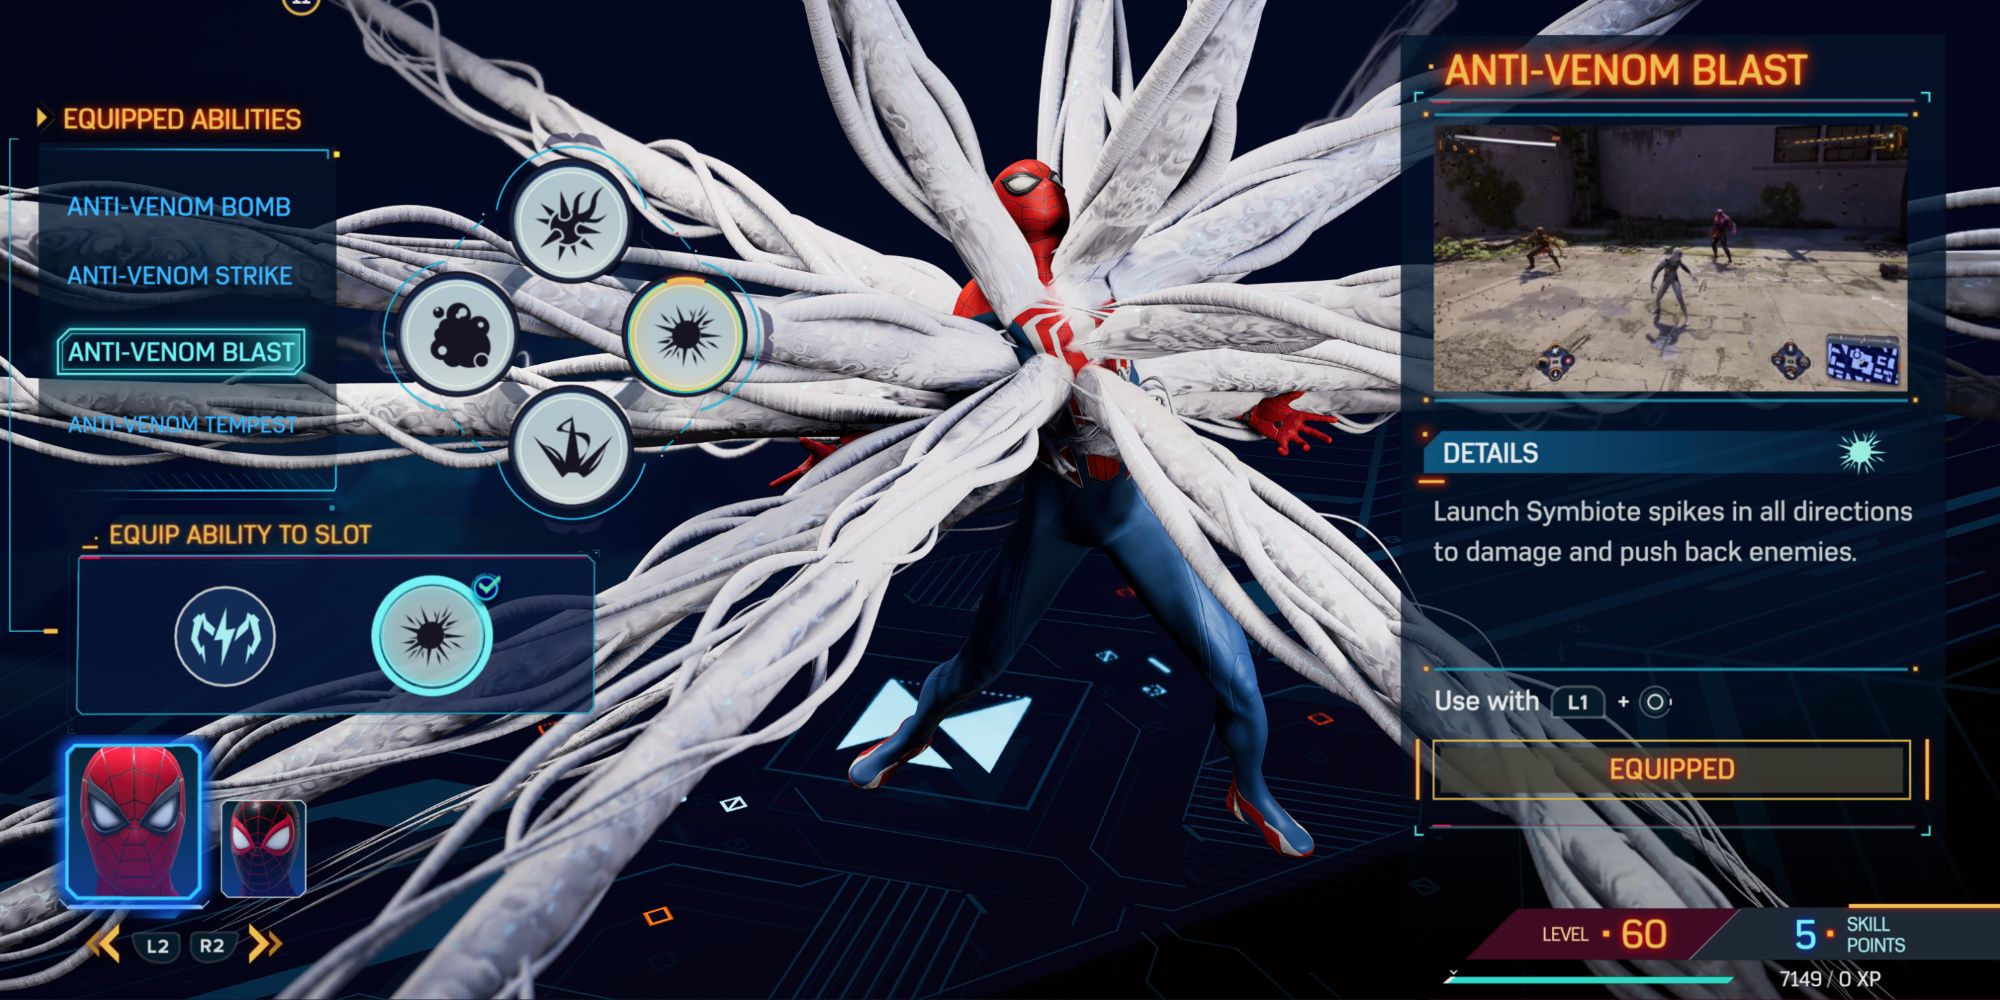 Anti-Venom Blast ability in Marvel's Spider-Man 2